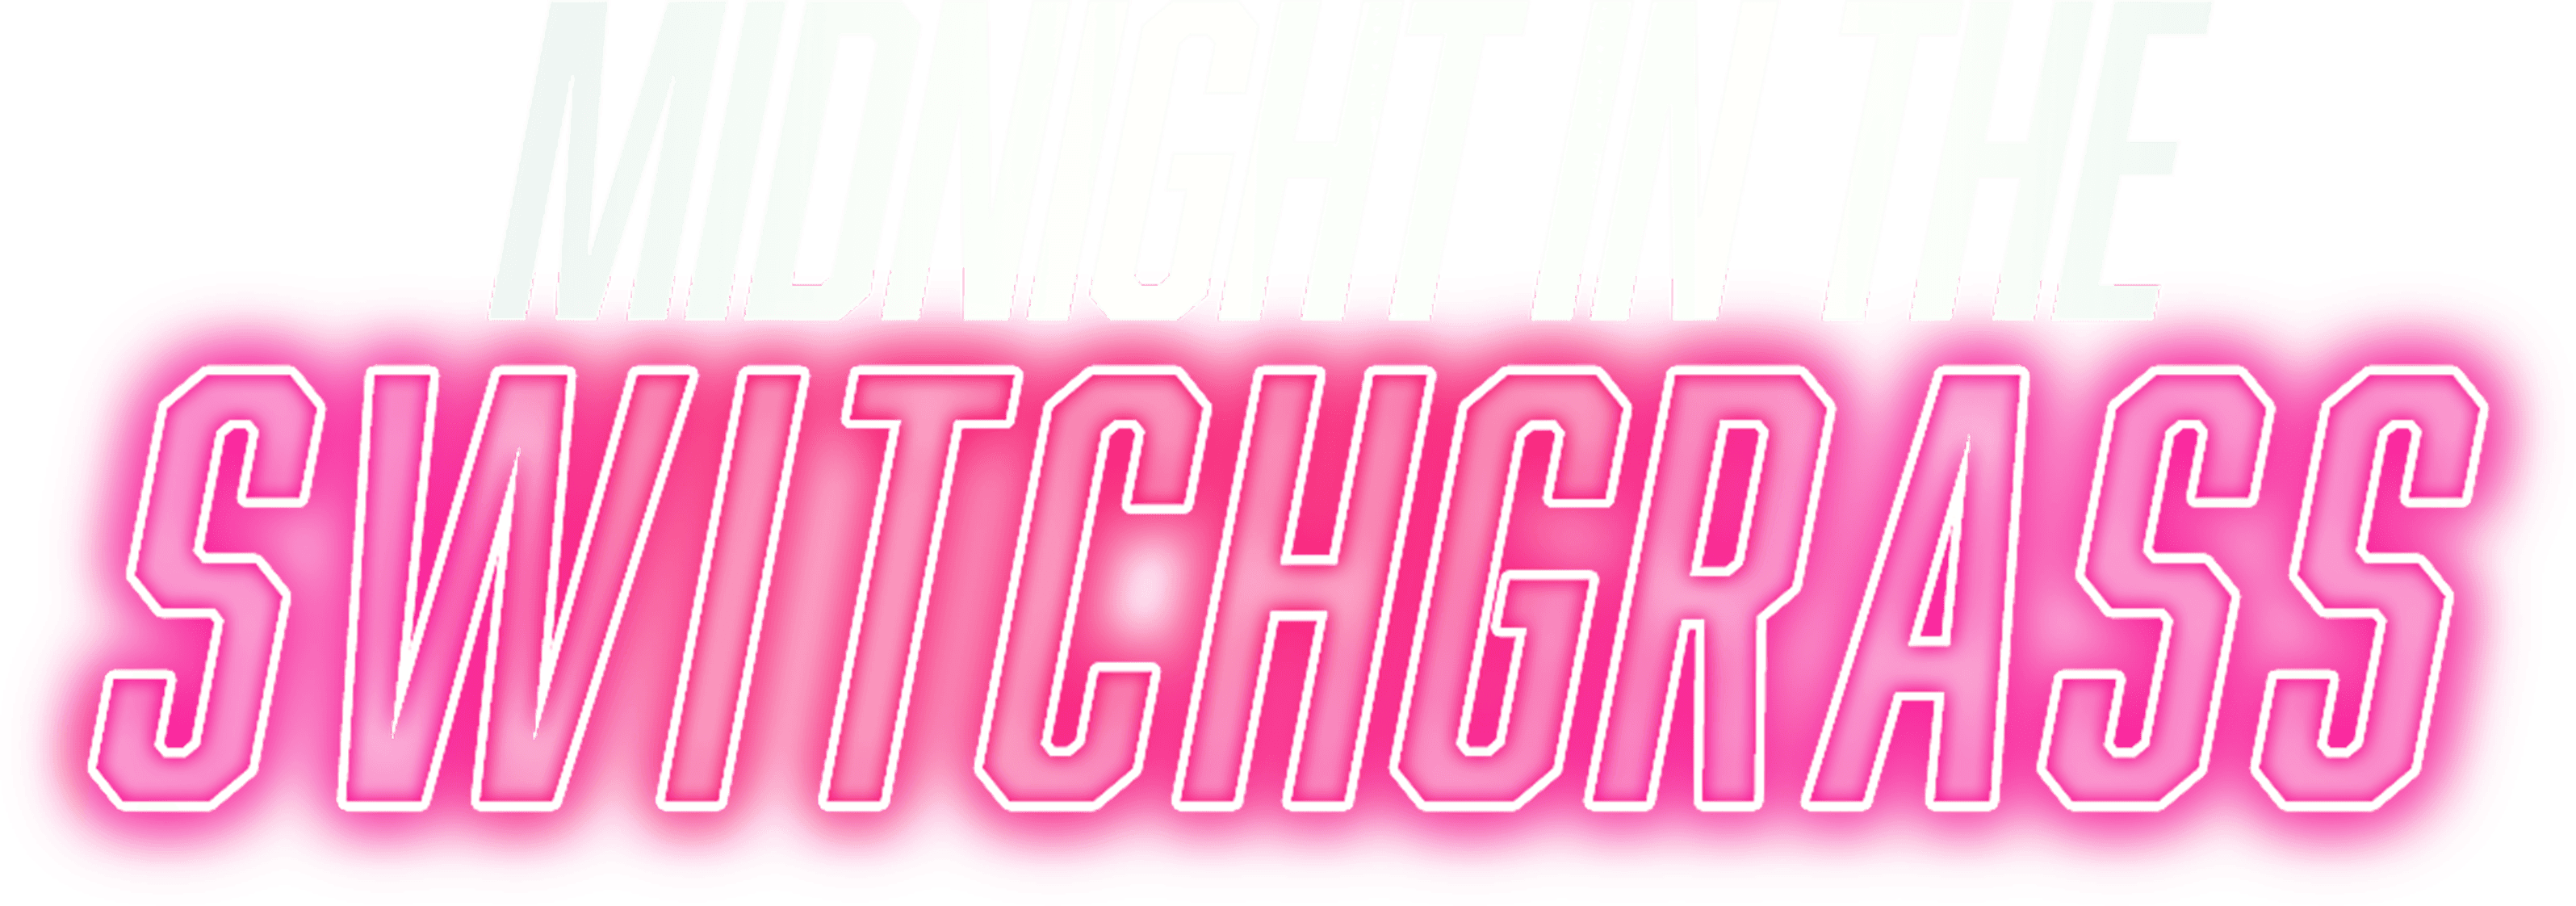 Midnight in the Switchgrass logo